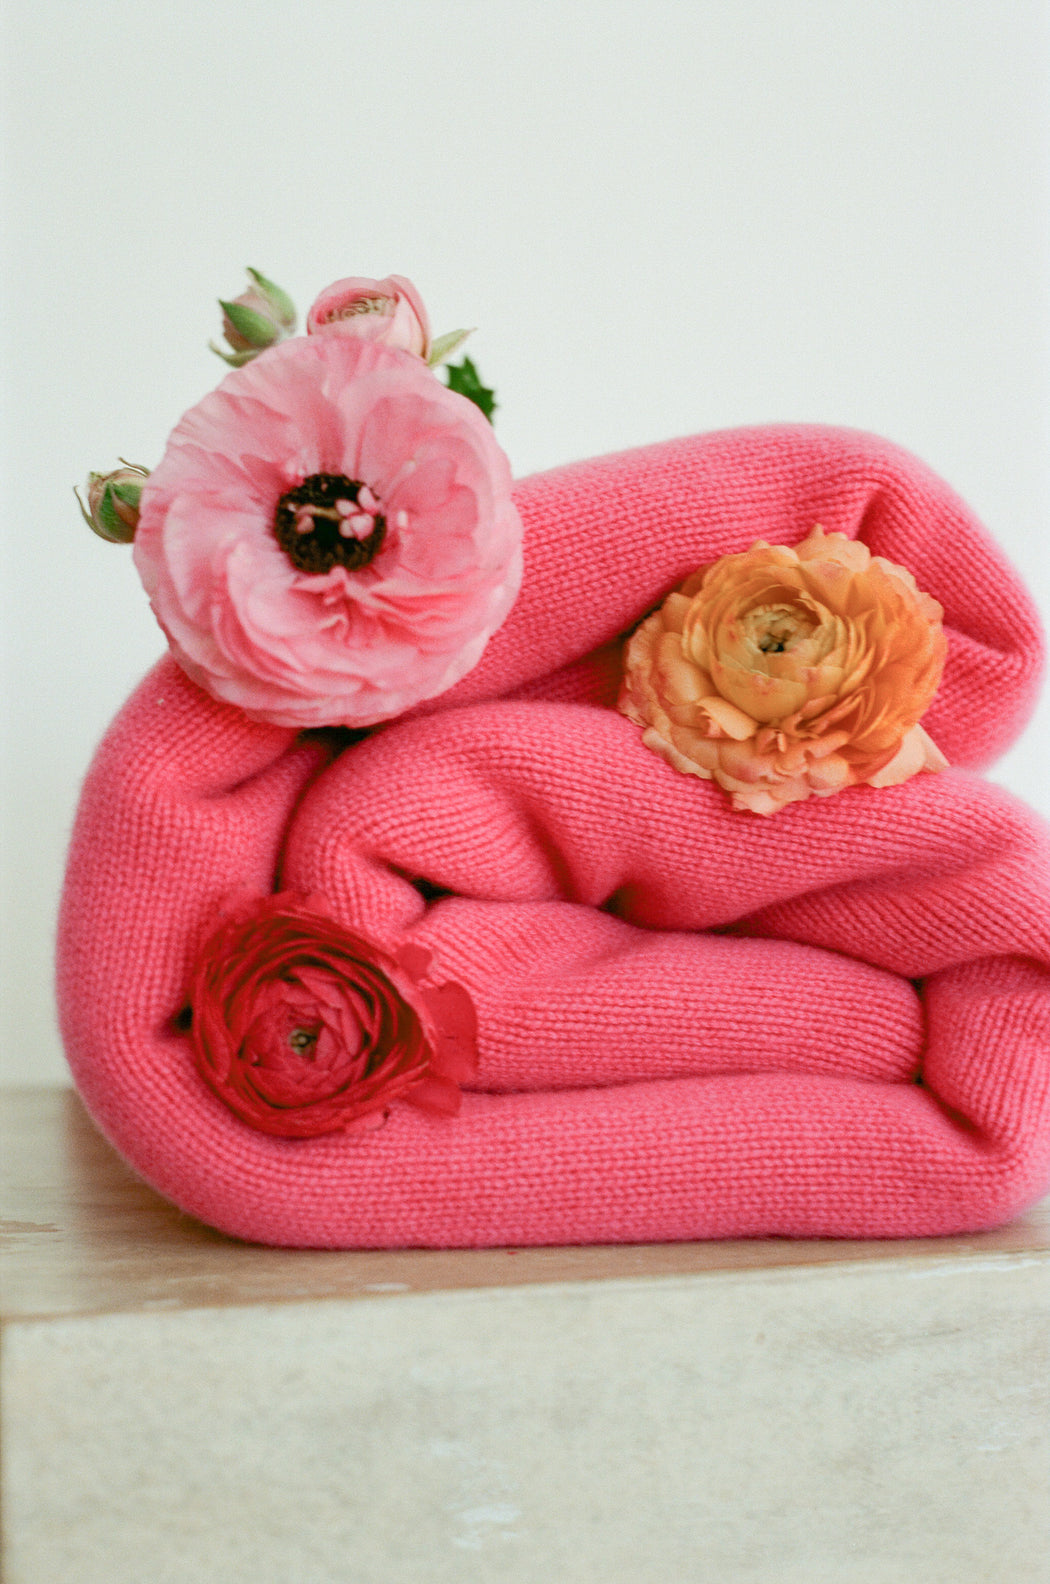 Oversized Italian Cashmere Jersey Knit Blanket - Camelia